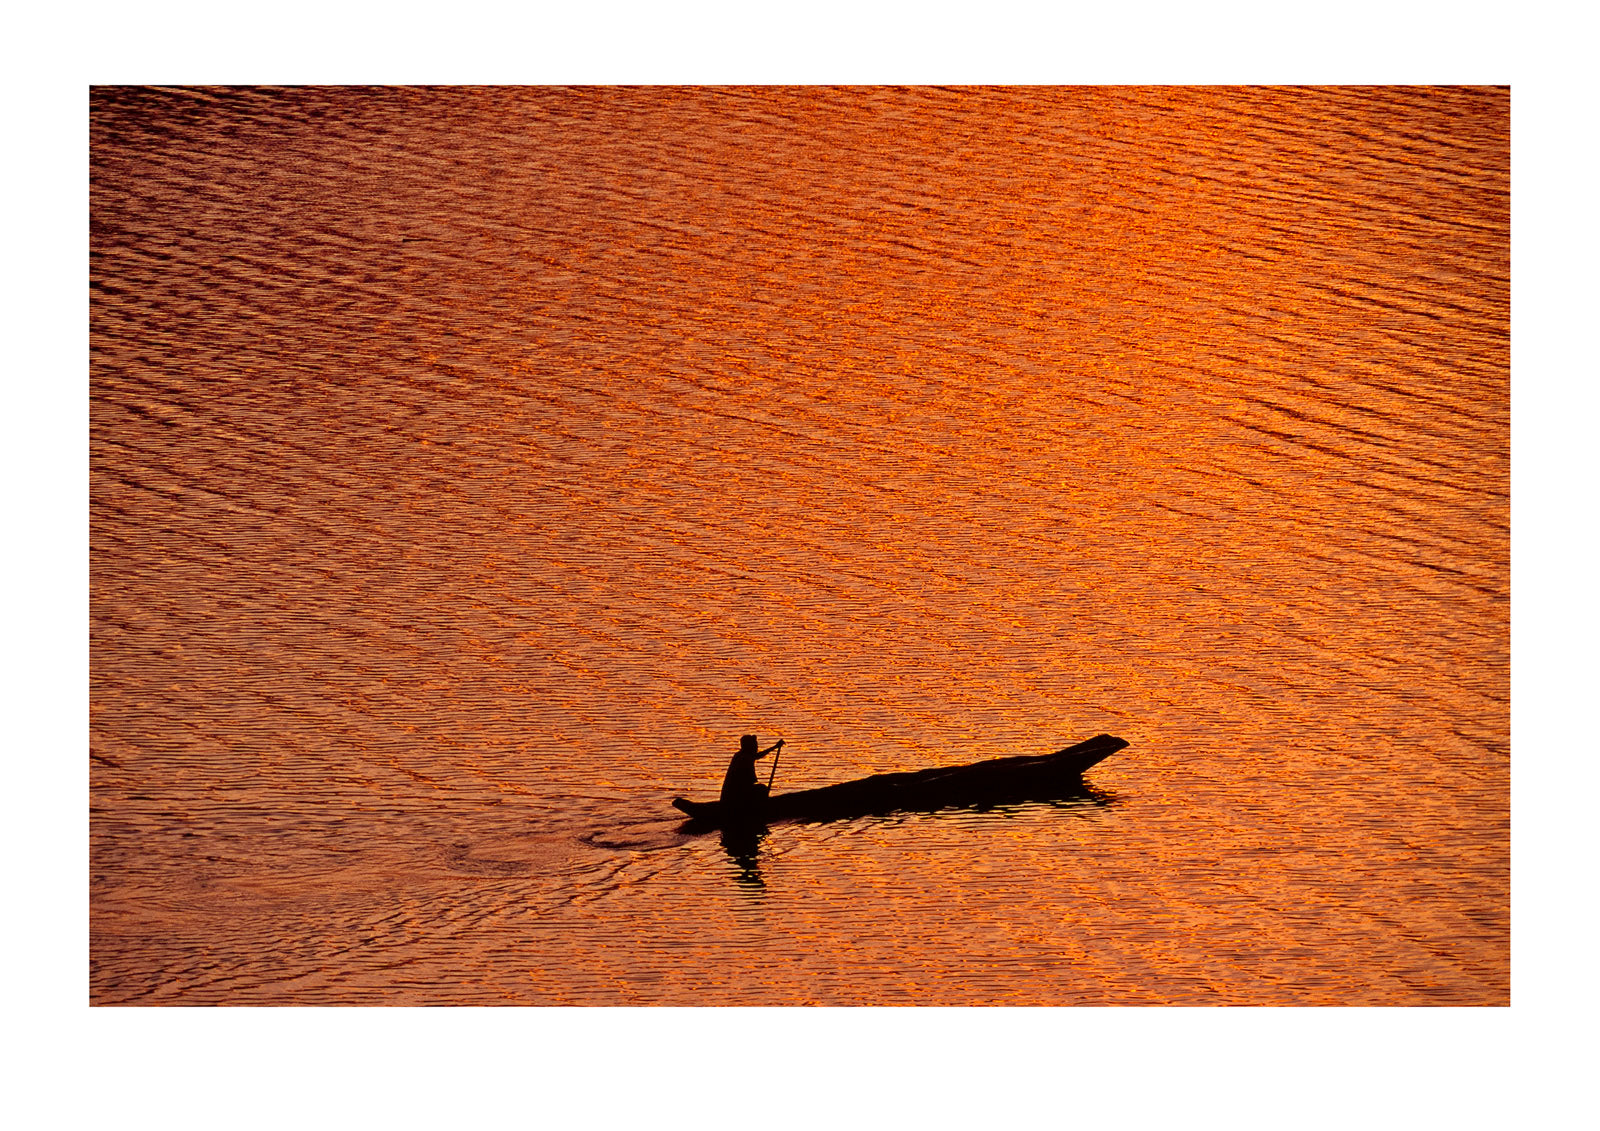 A fisherman in a dugout canoe on a golden lake surface at dawn. Lake Mutanda, Kisoro District, South Western Uganda.